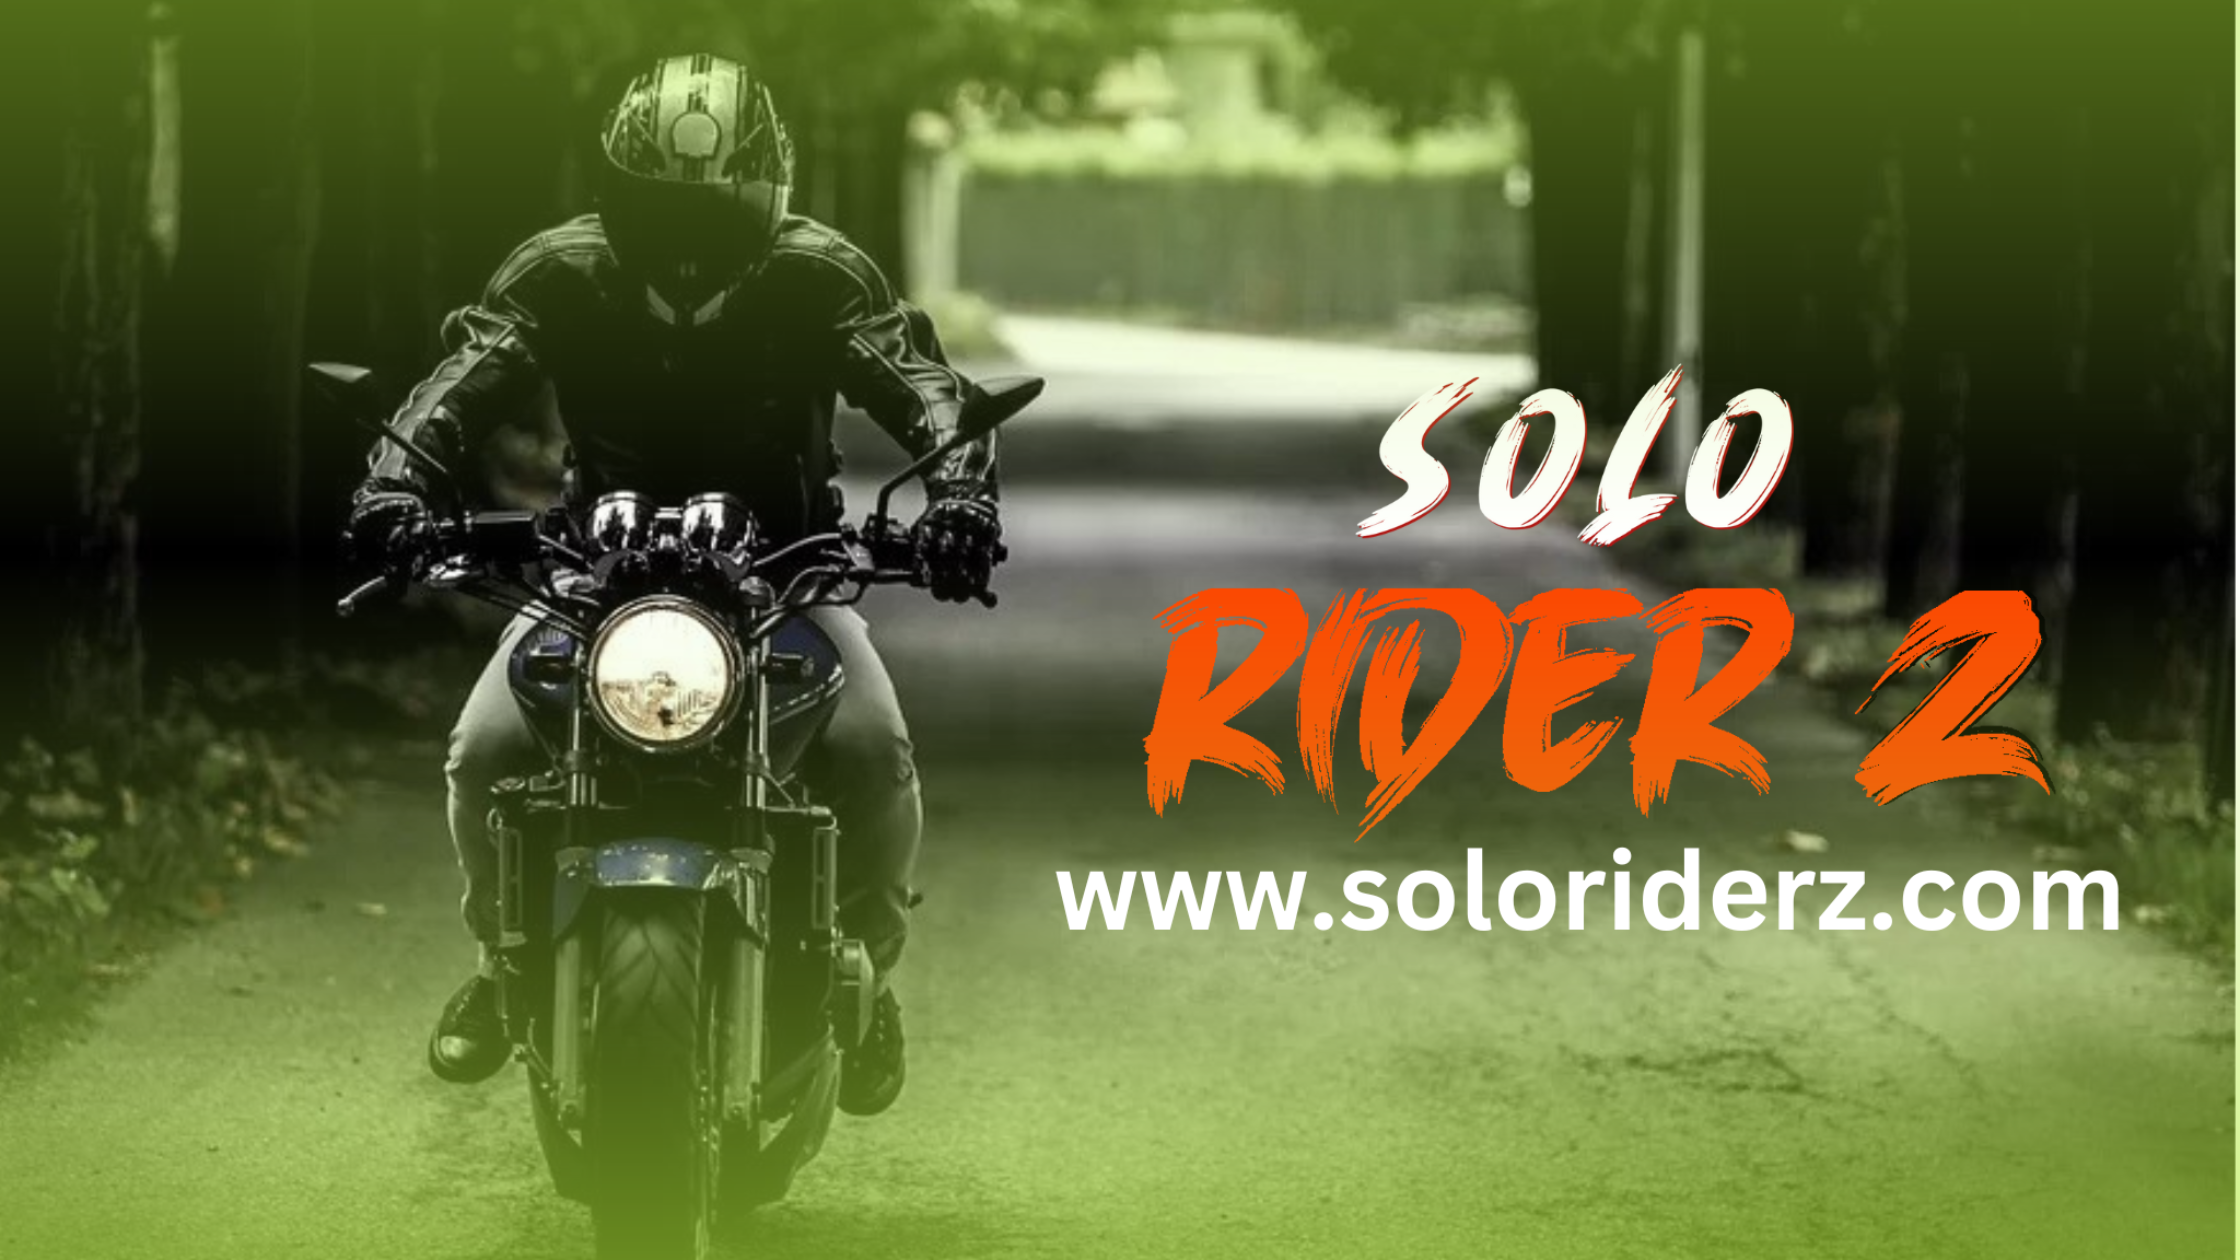 solo rider z blog banner